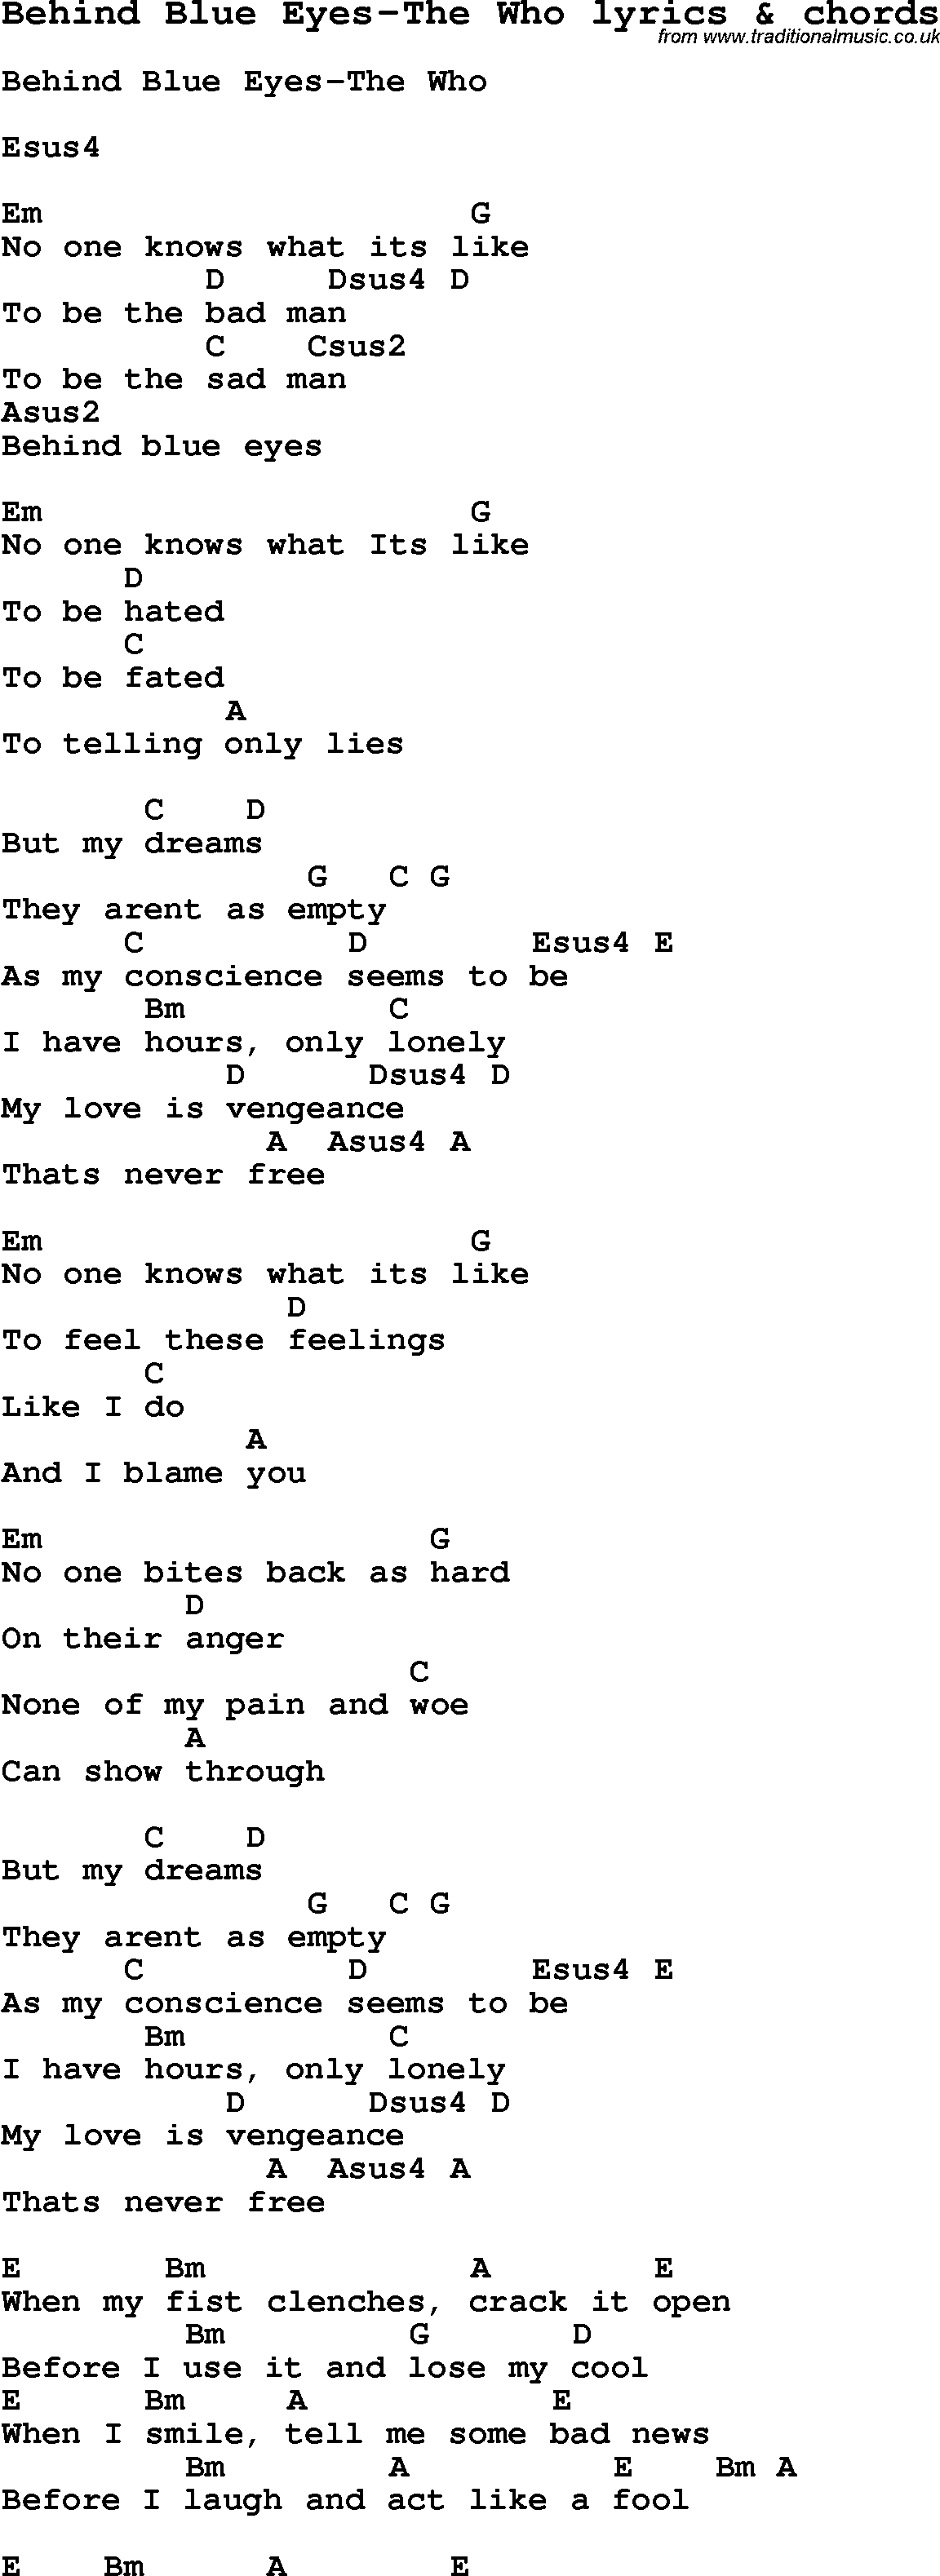 Love Song Lyrics for: Behind Blue Eyes-The Who with chords for Ukulele, Guitar Banjo etc.